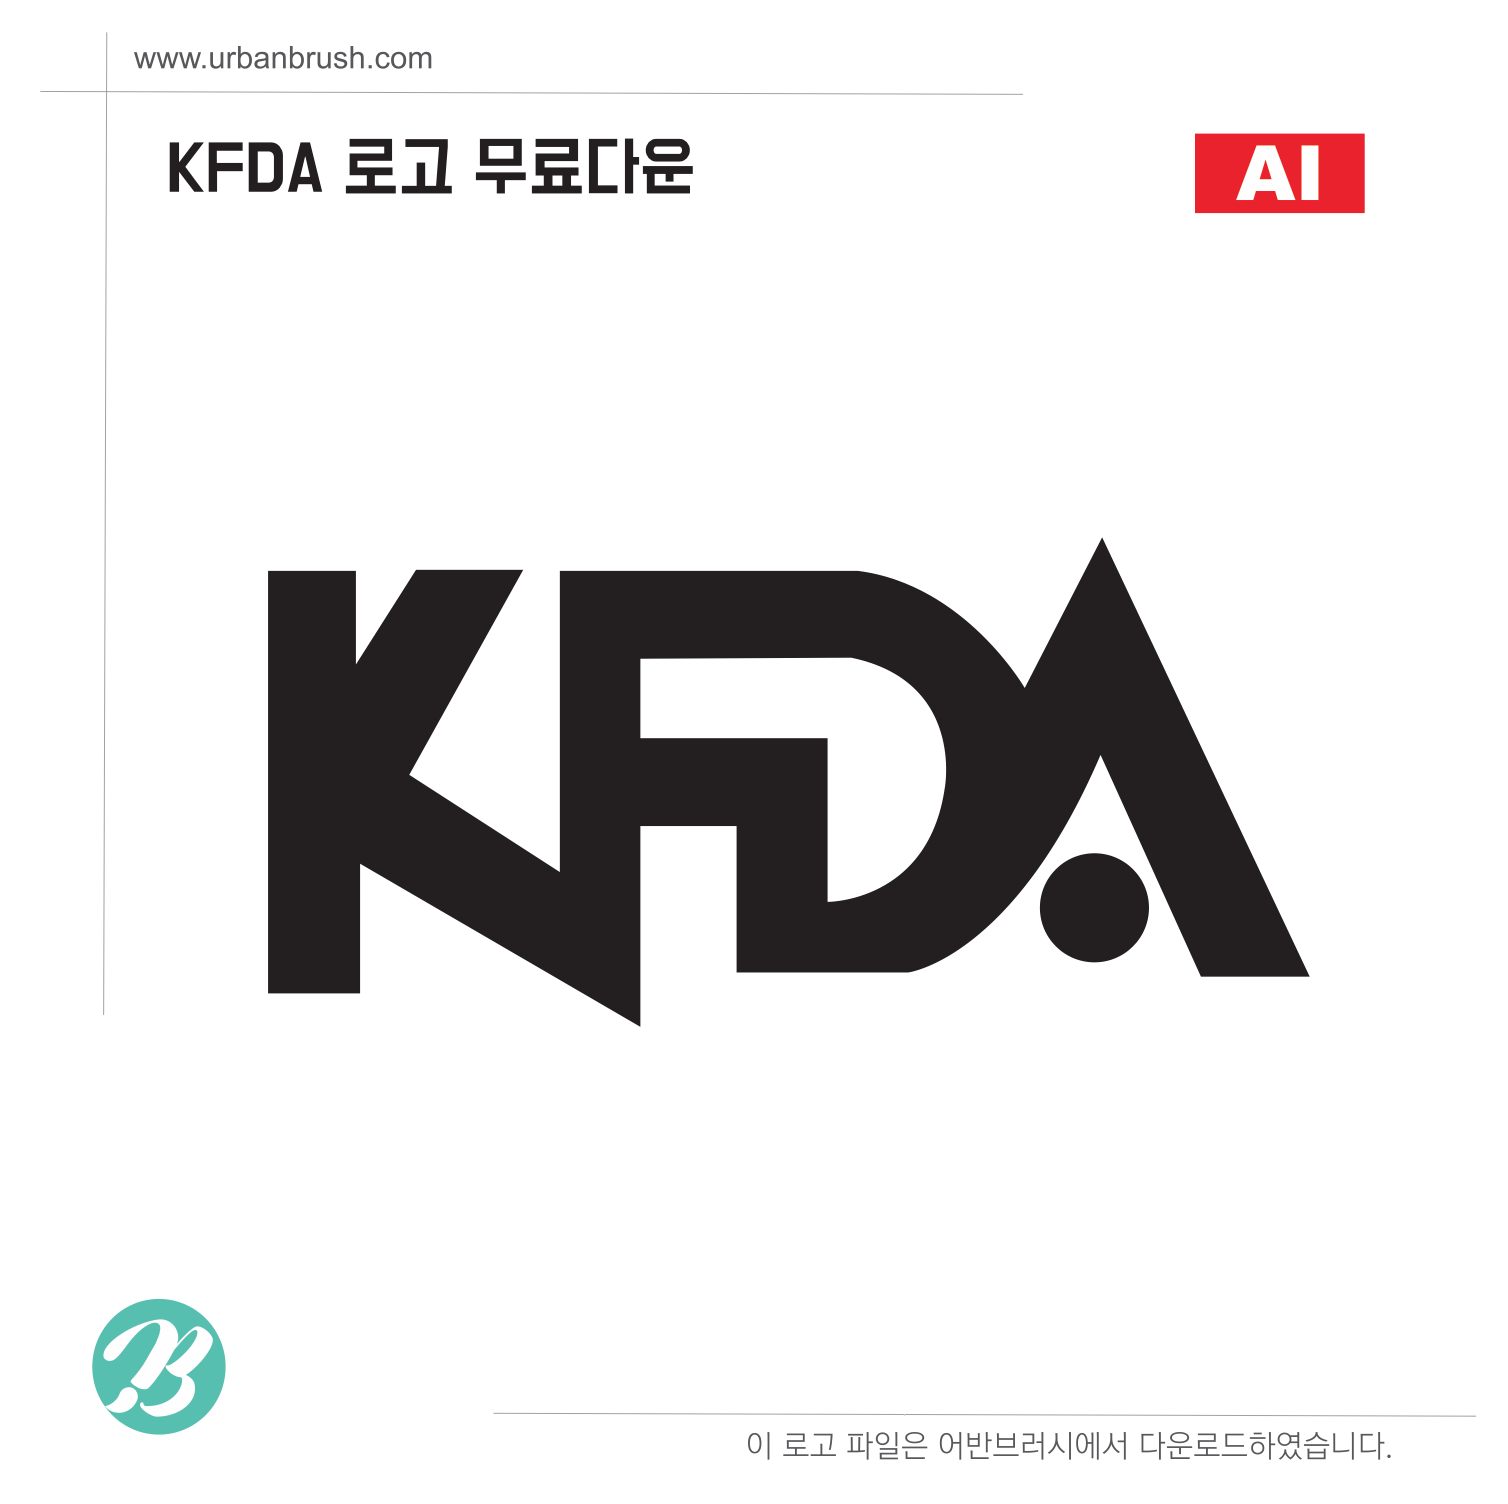 KFDA Logo - KFDA 로고 ai 무료다운로드 - Urbanbrush